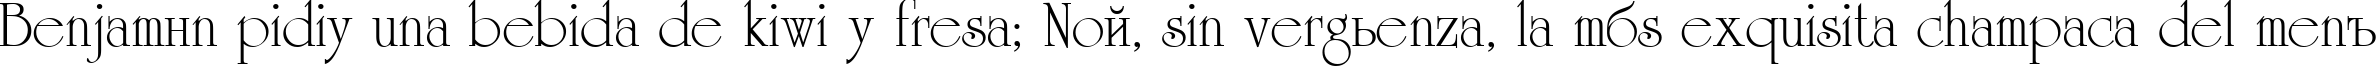 Пример написания шрифтом Reverence Normal текста на испанском